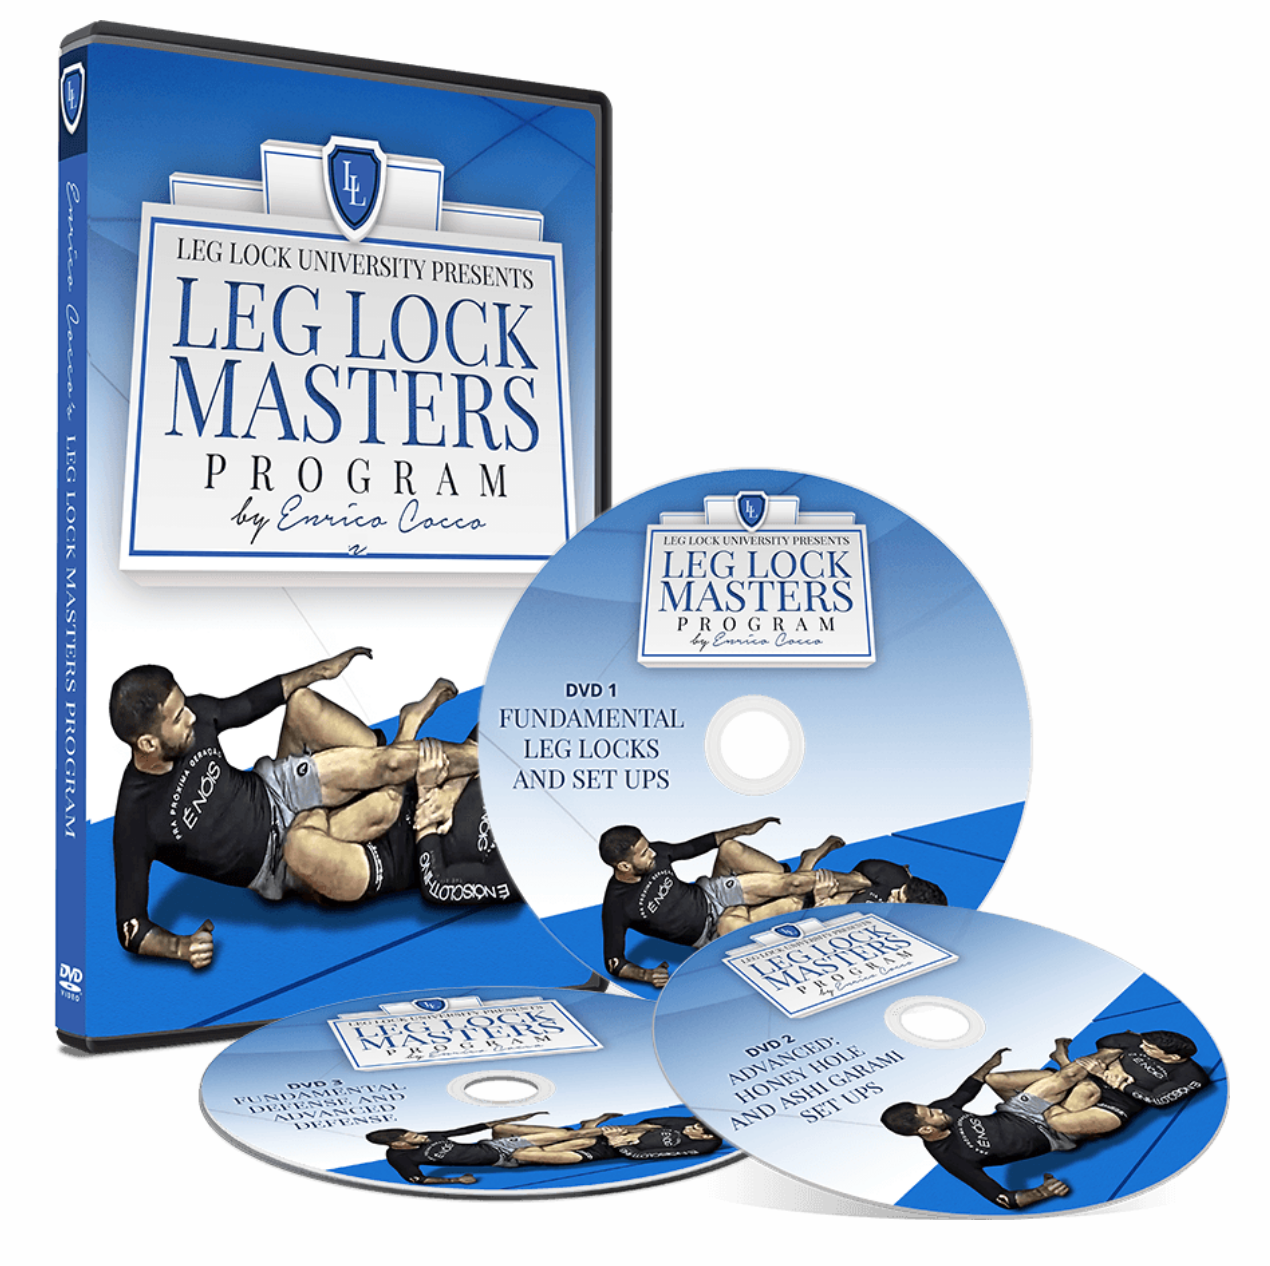 Enrico Cocco's Leg Lock Masters Program